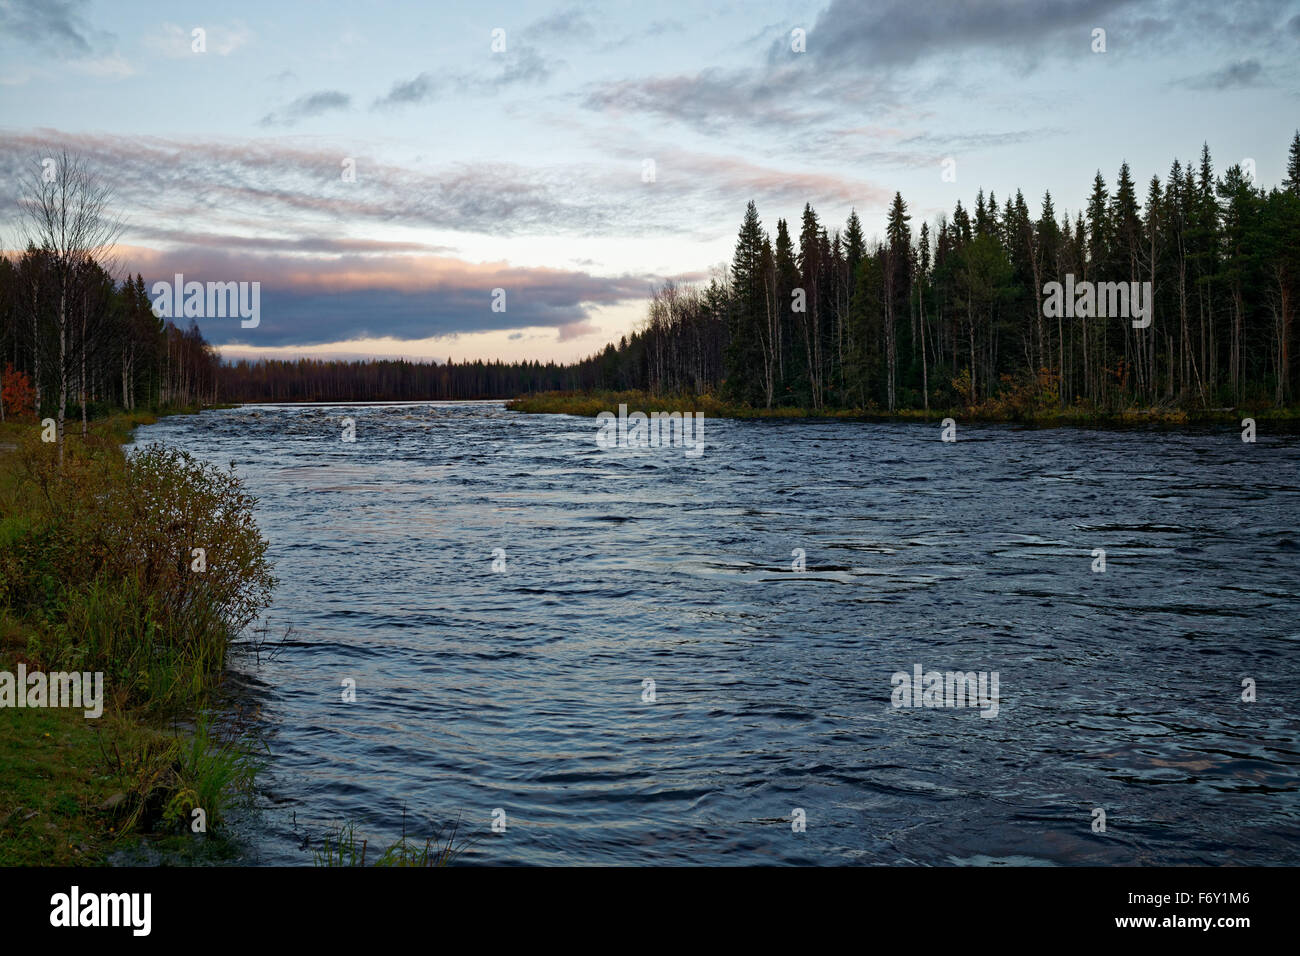 Rovaniemi, Laponie, Finlande. 28 Sep, 2015. Vaattunkijoki river à Rovaniemi, Laponie, Finlande, le 28 septembre 2015. Photo : PETER ENDIG/DPA - PAS DE FIL - SERVICE/dpa/Alamy Live News Banque D'Images